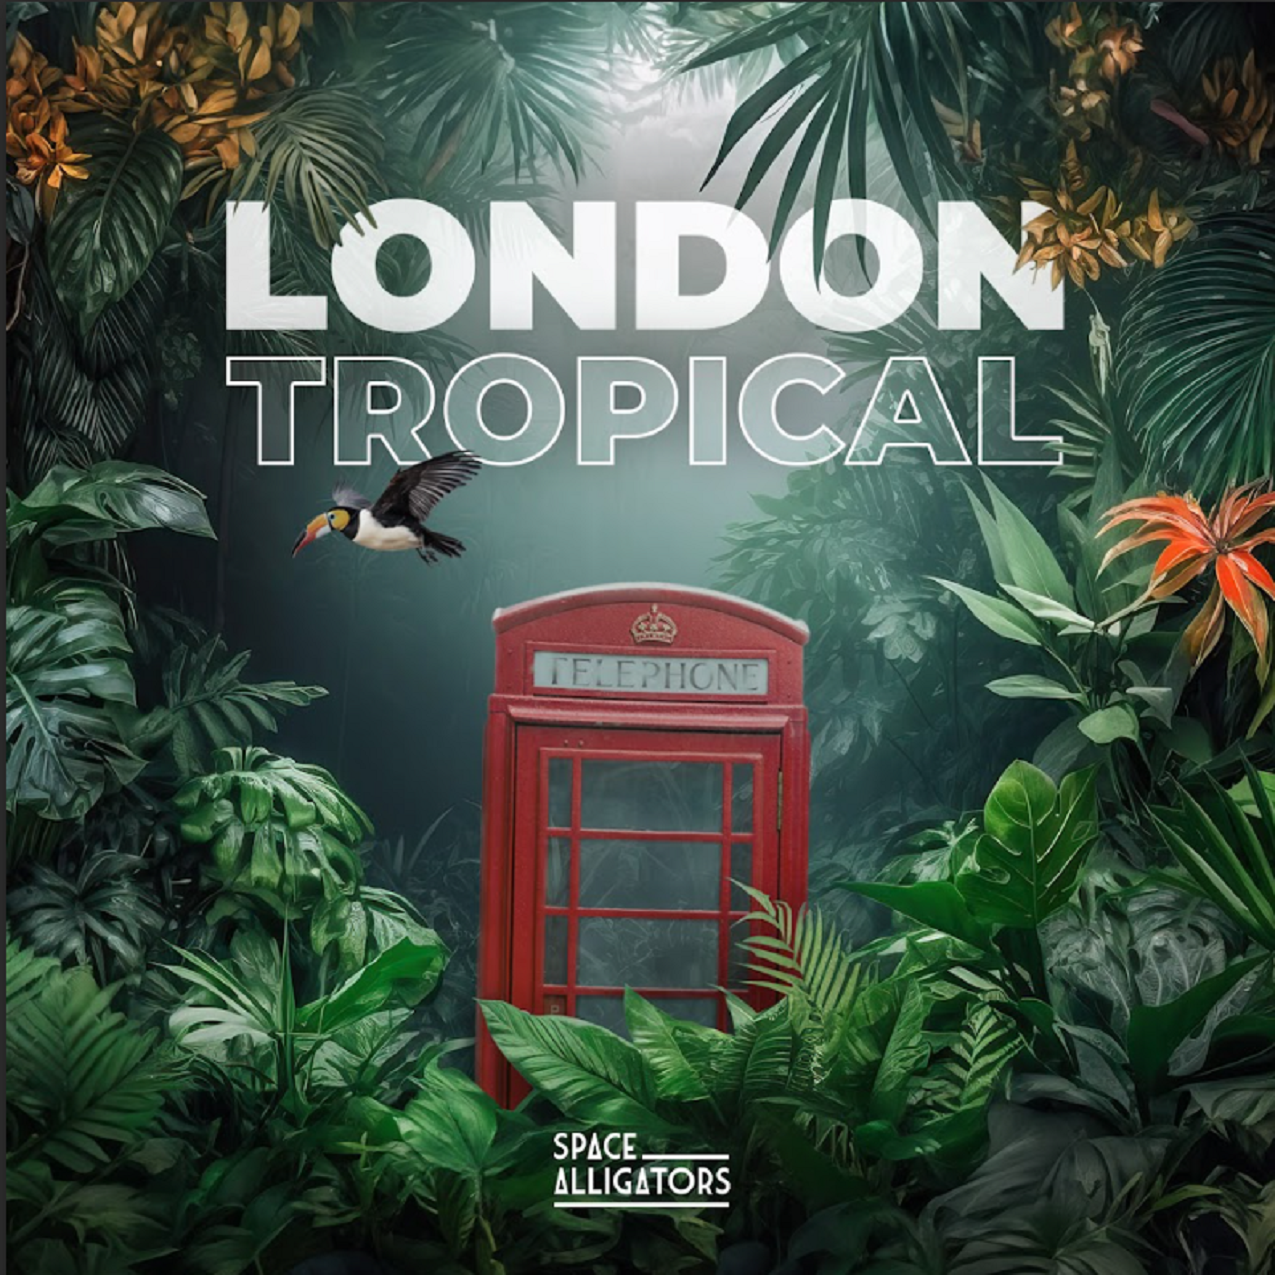 Space Alligators new release London Tropical